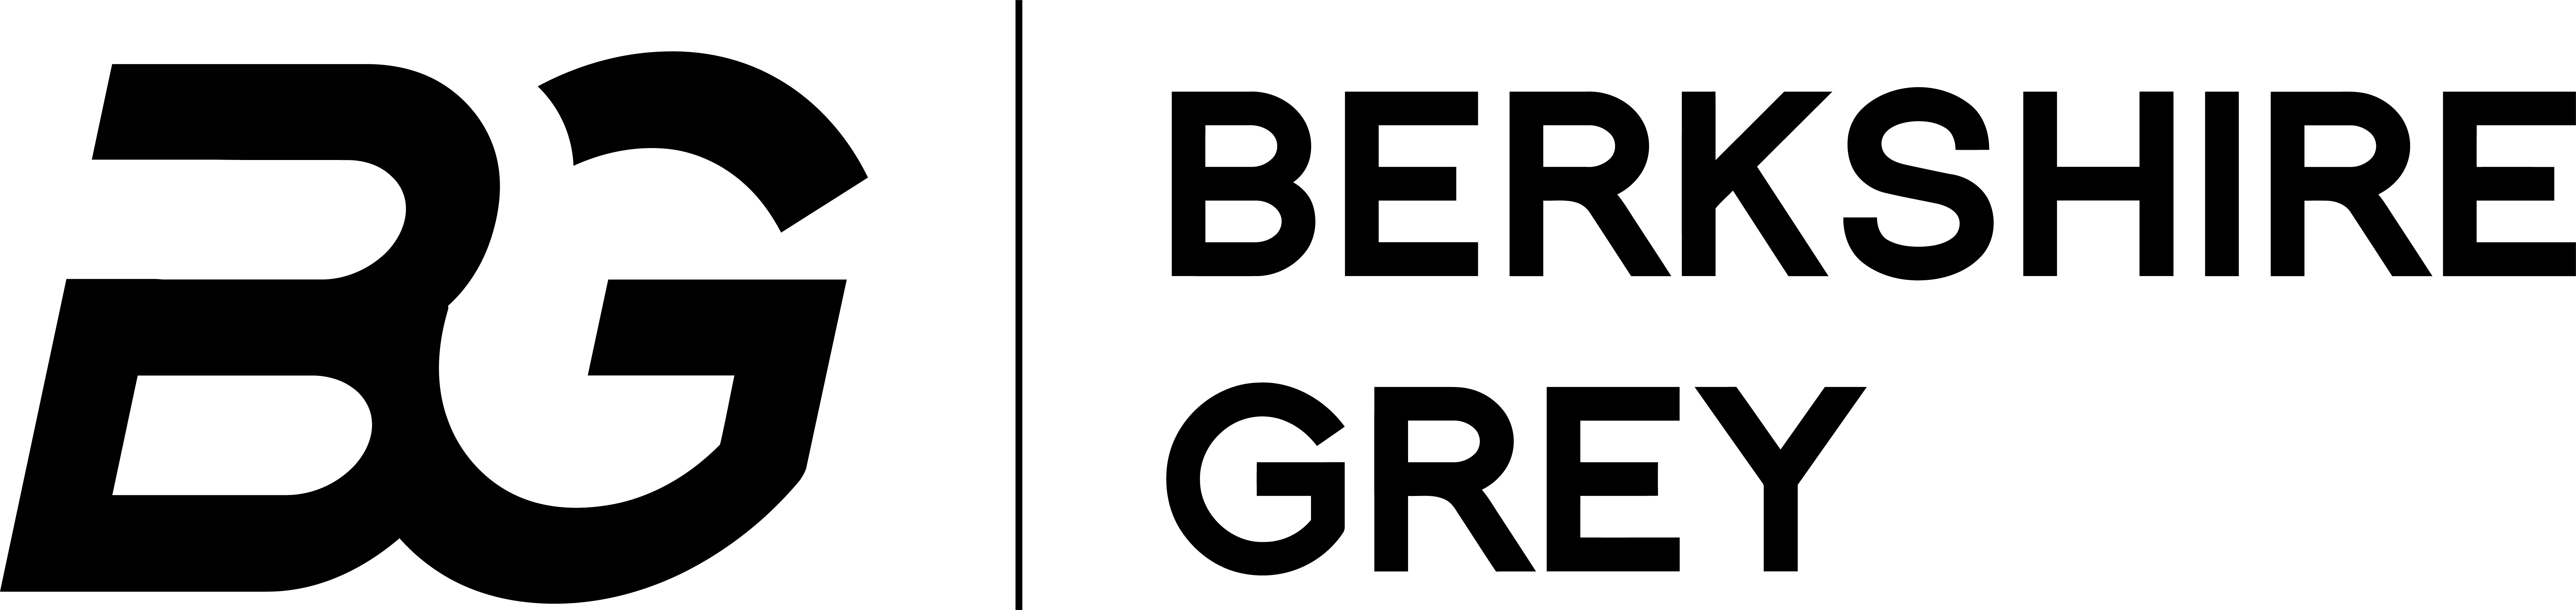 Berkshire Grey Logo_Primary_jpg.jpg